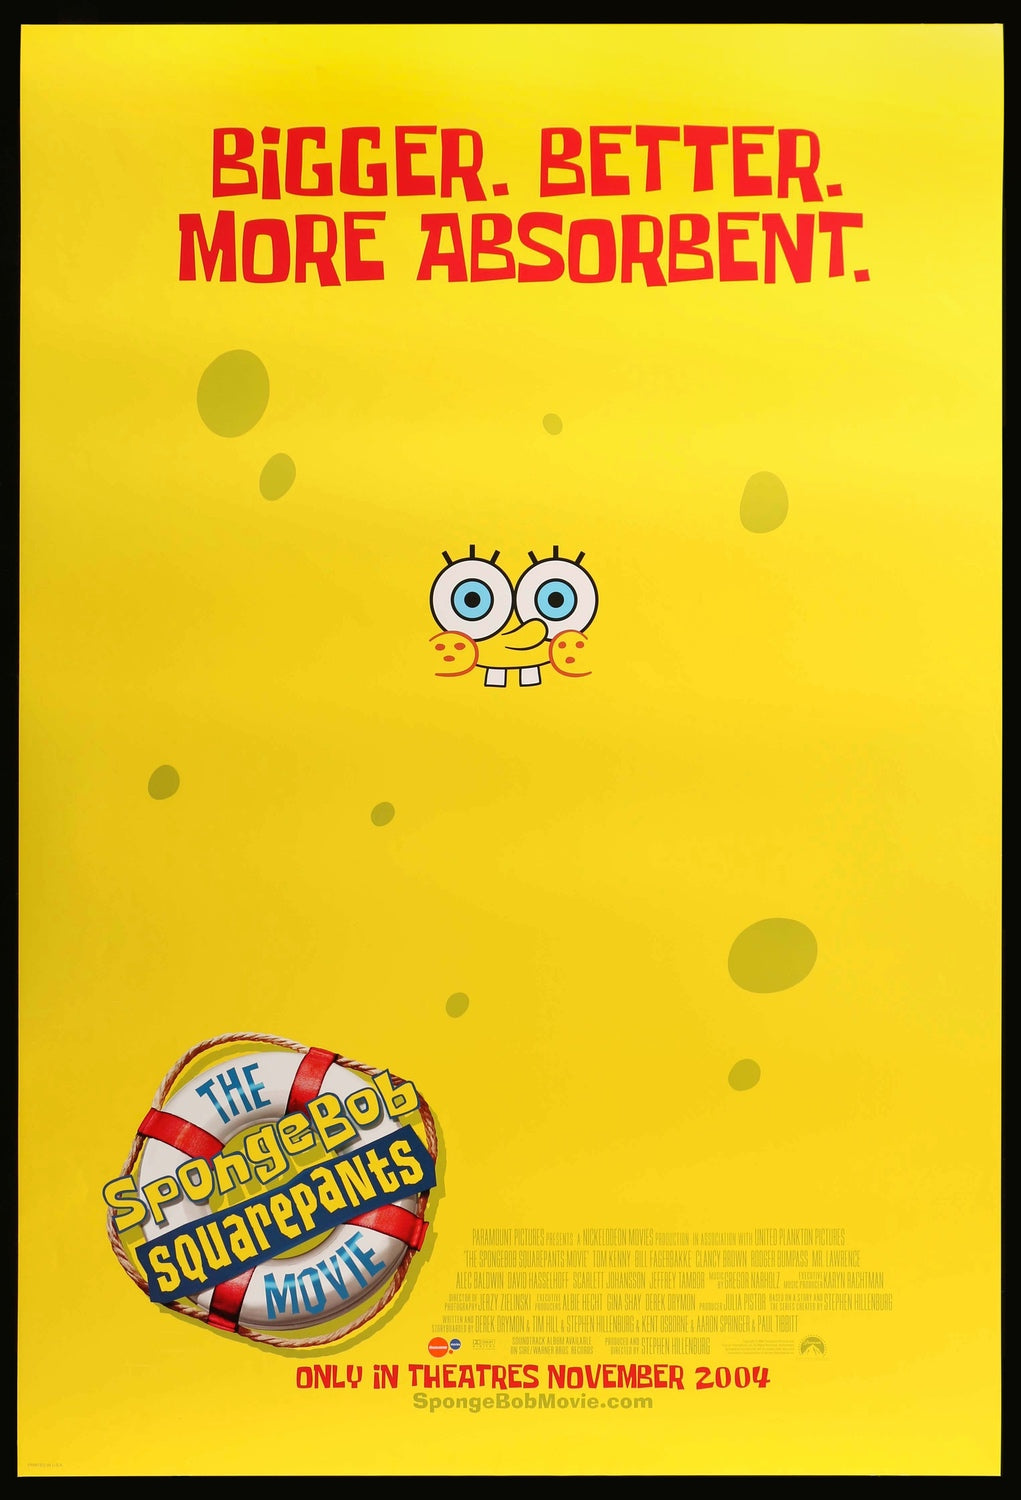 spongebob squarepants movie poster